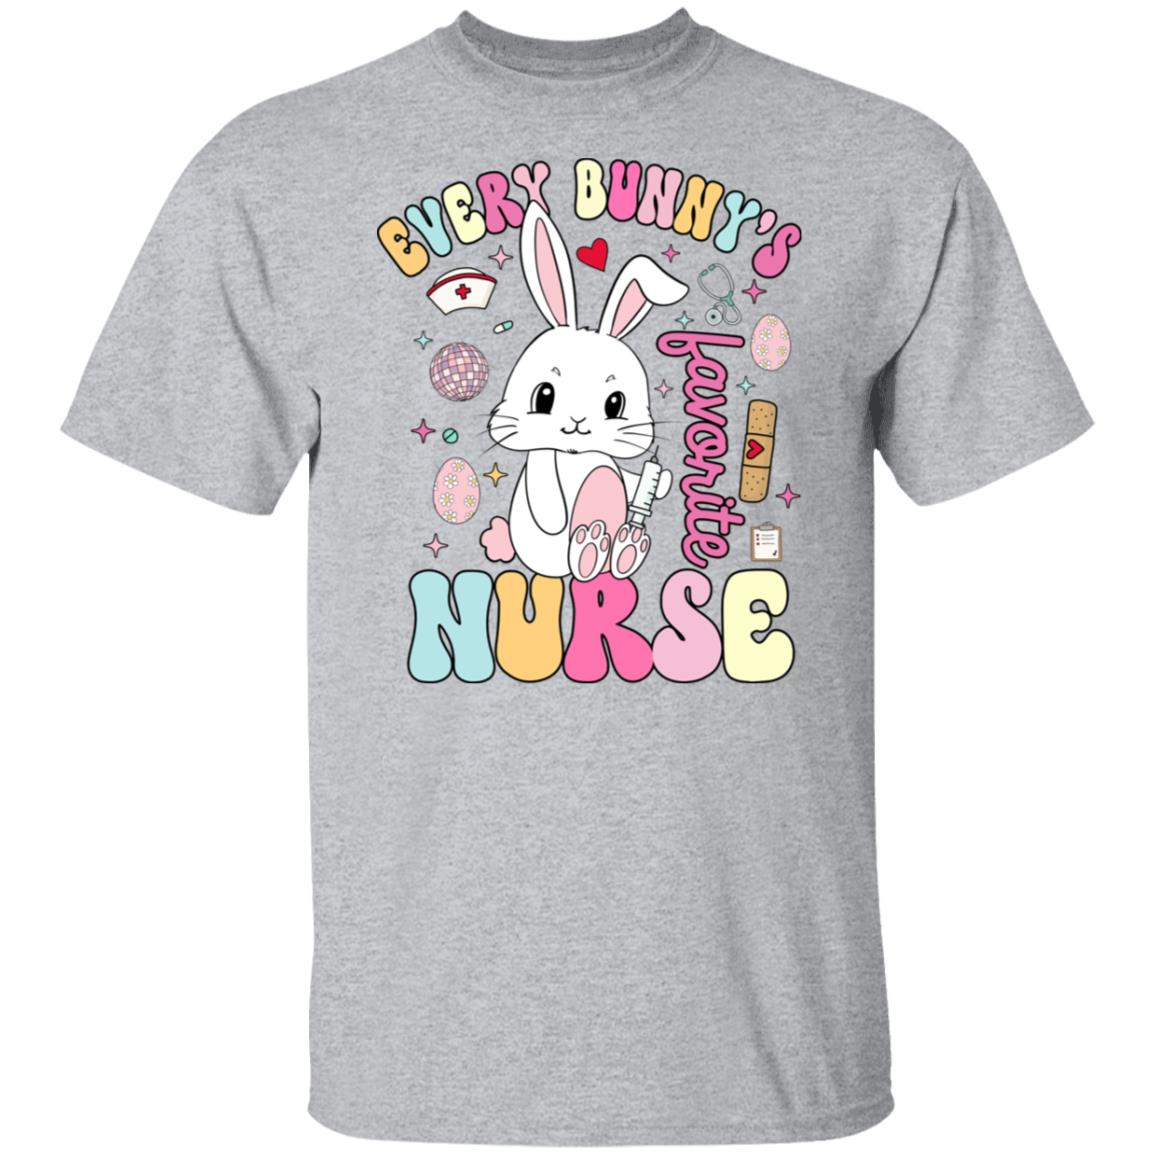 Every Bunny Favorite's Nurse 5.3 oz. T-Shirt